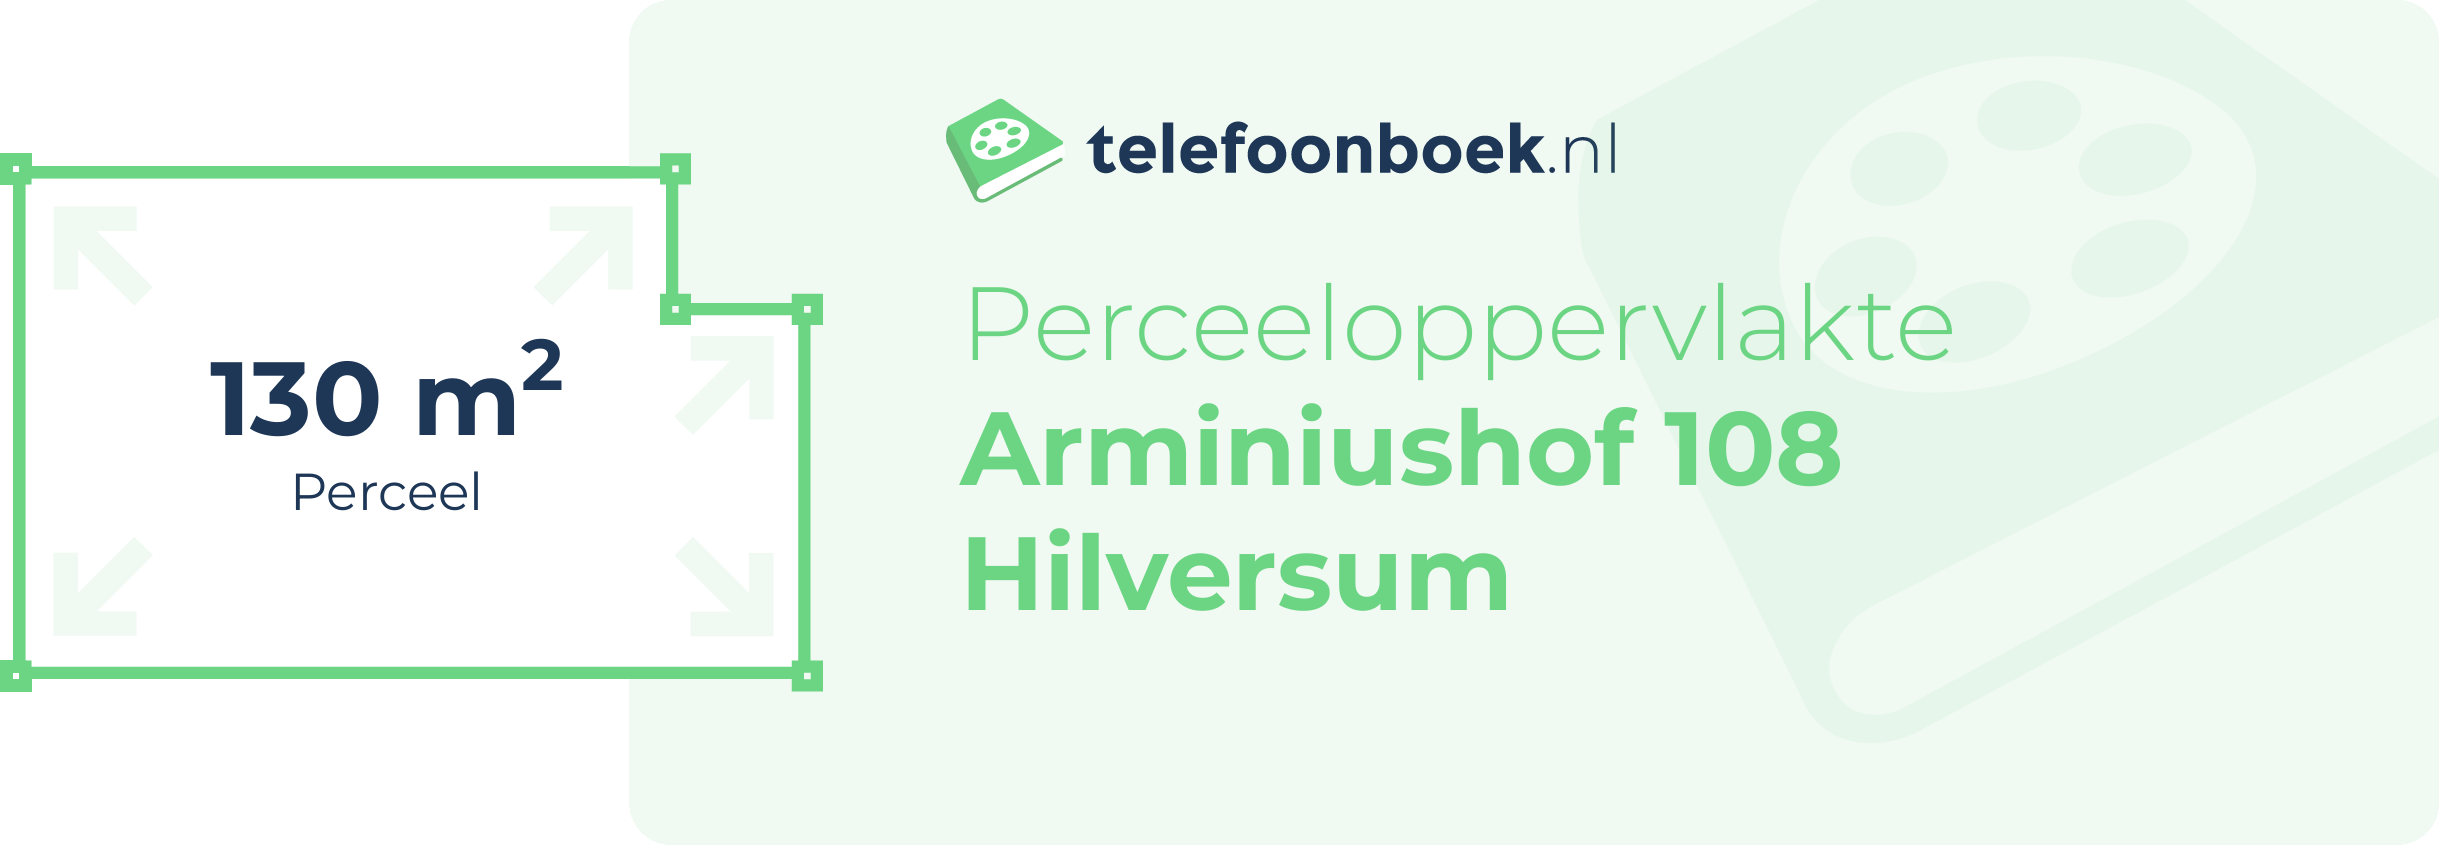 Perceeloppervlakte Arminiushof 108 Hilversum